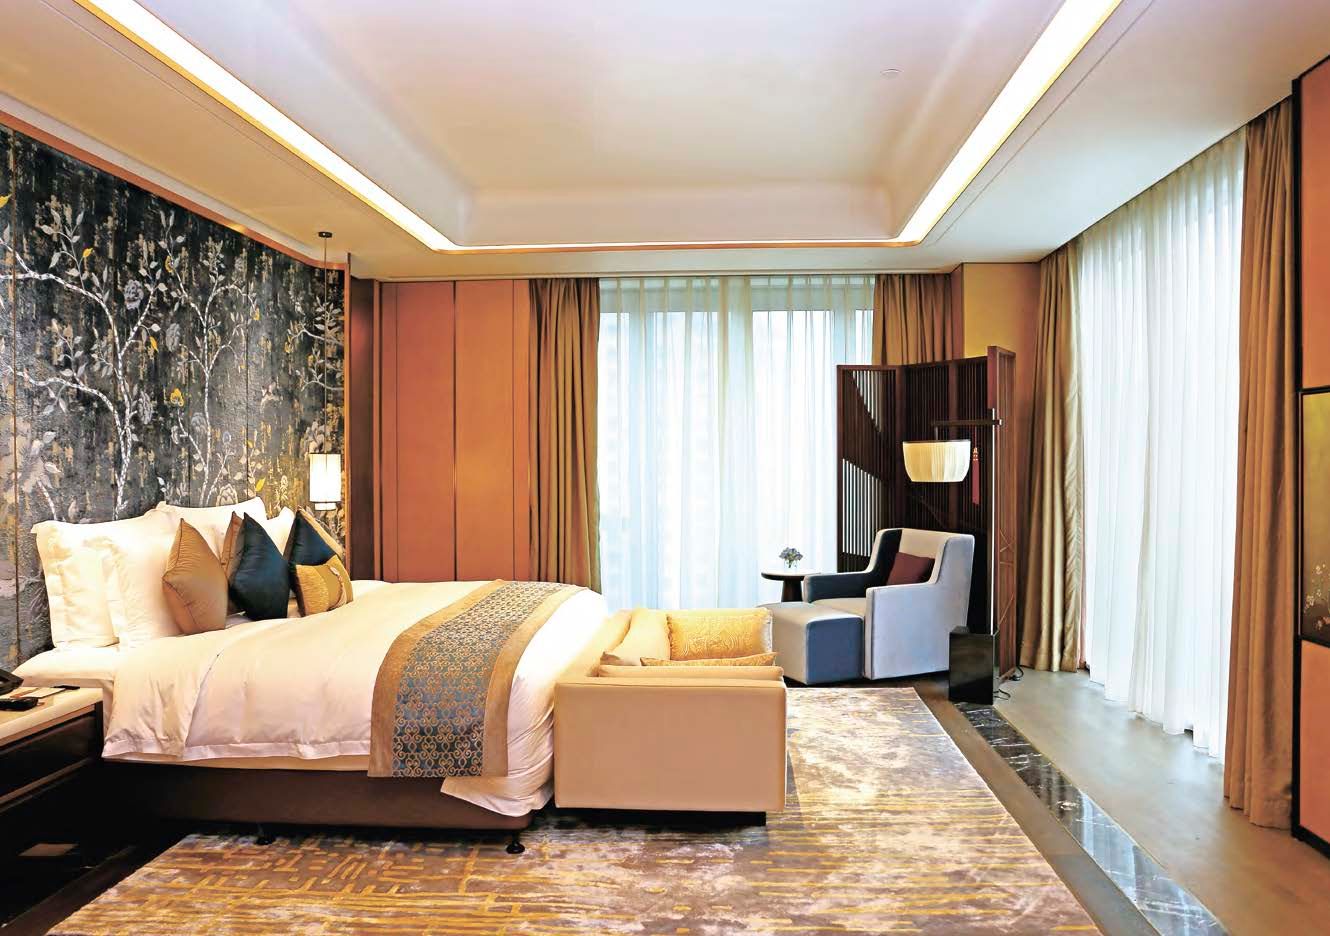 Luxury Bedroom Furniture 